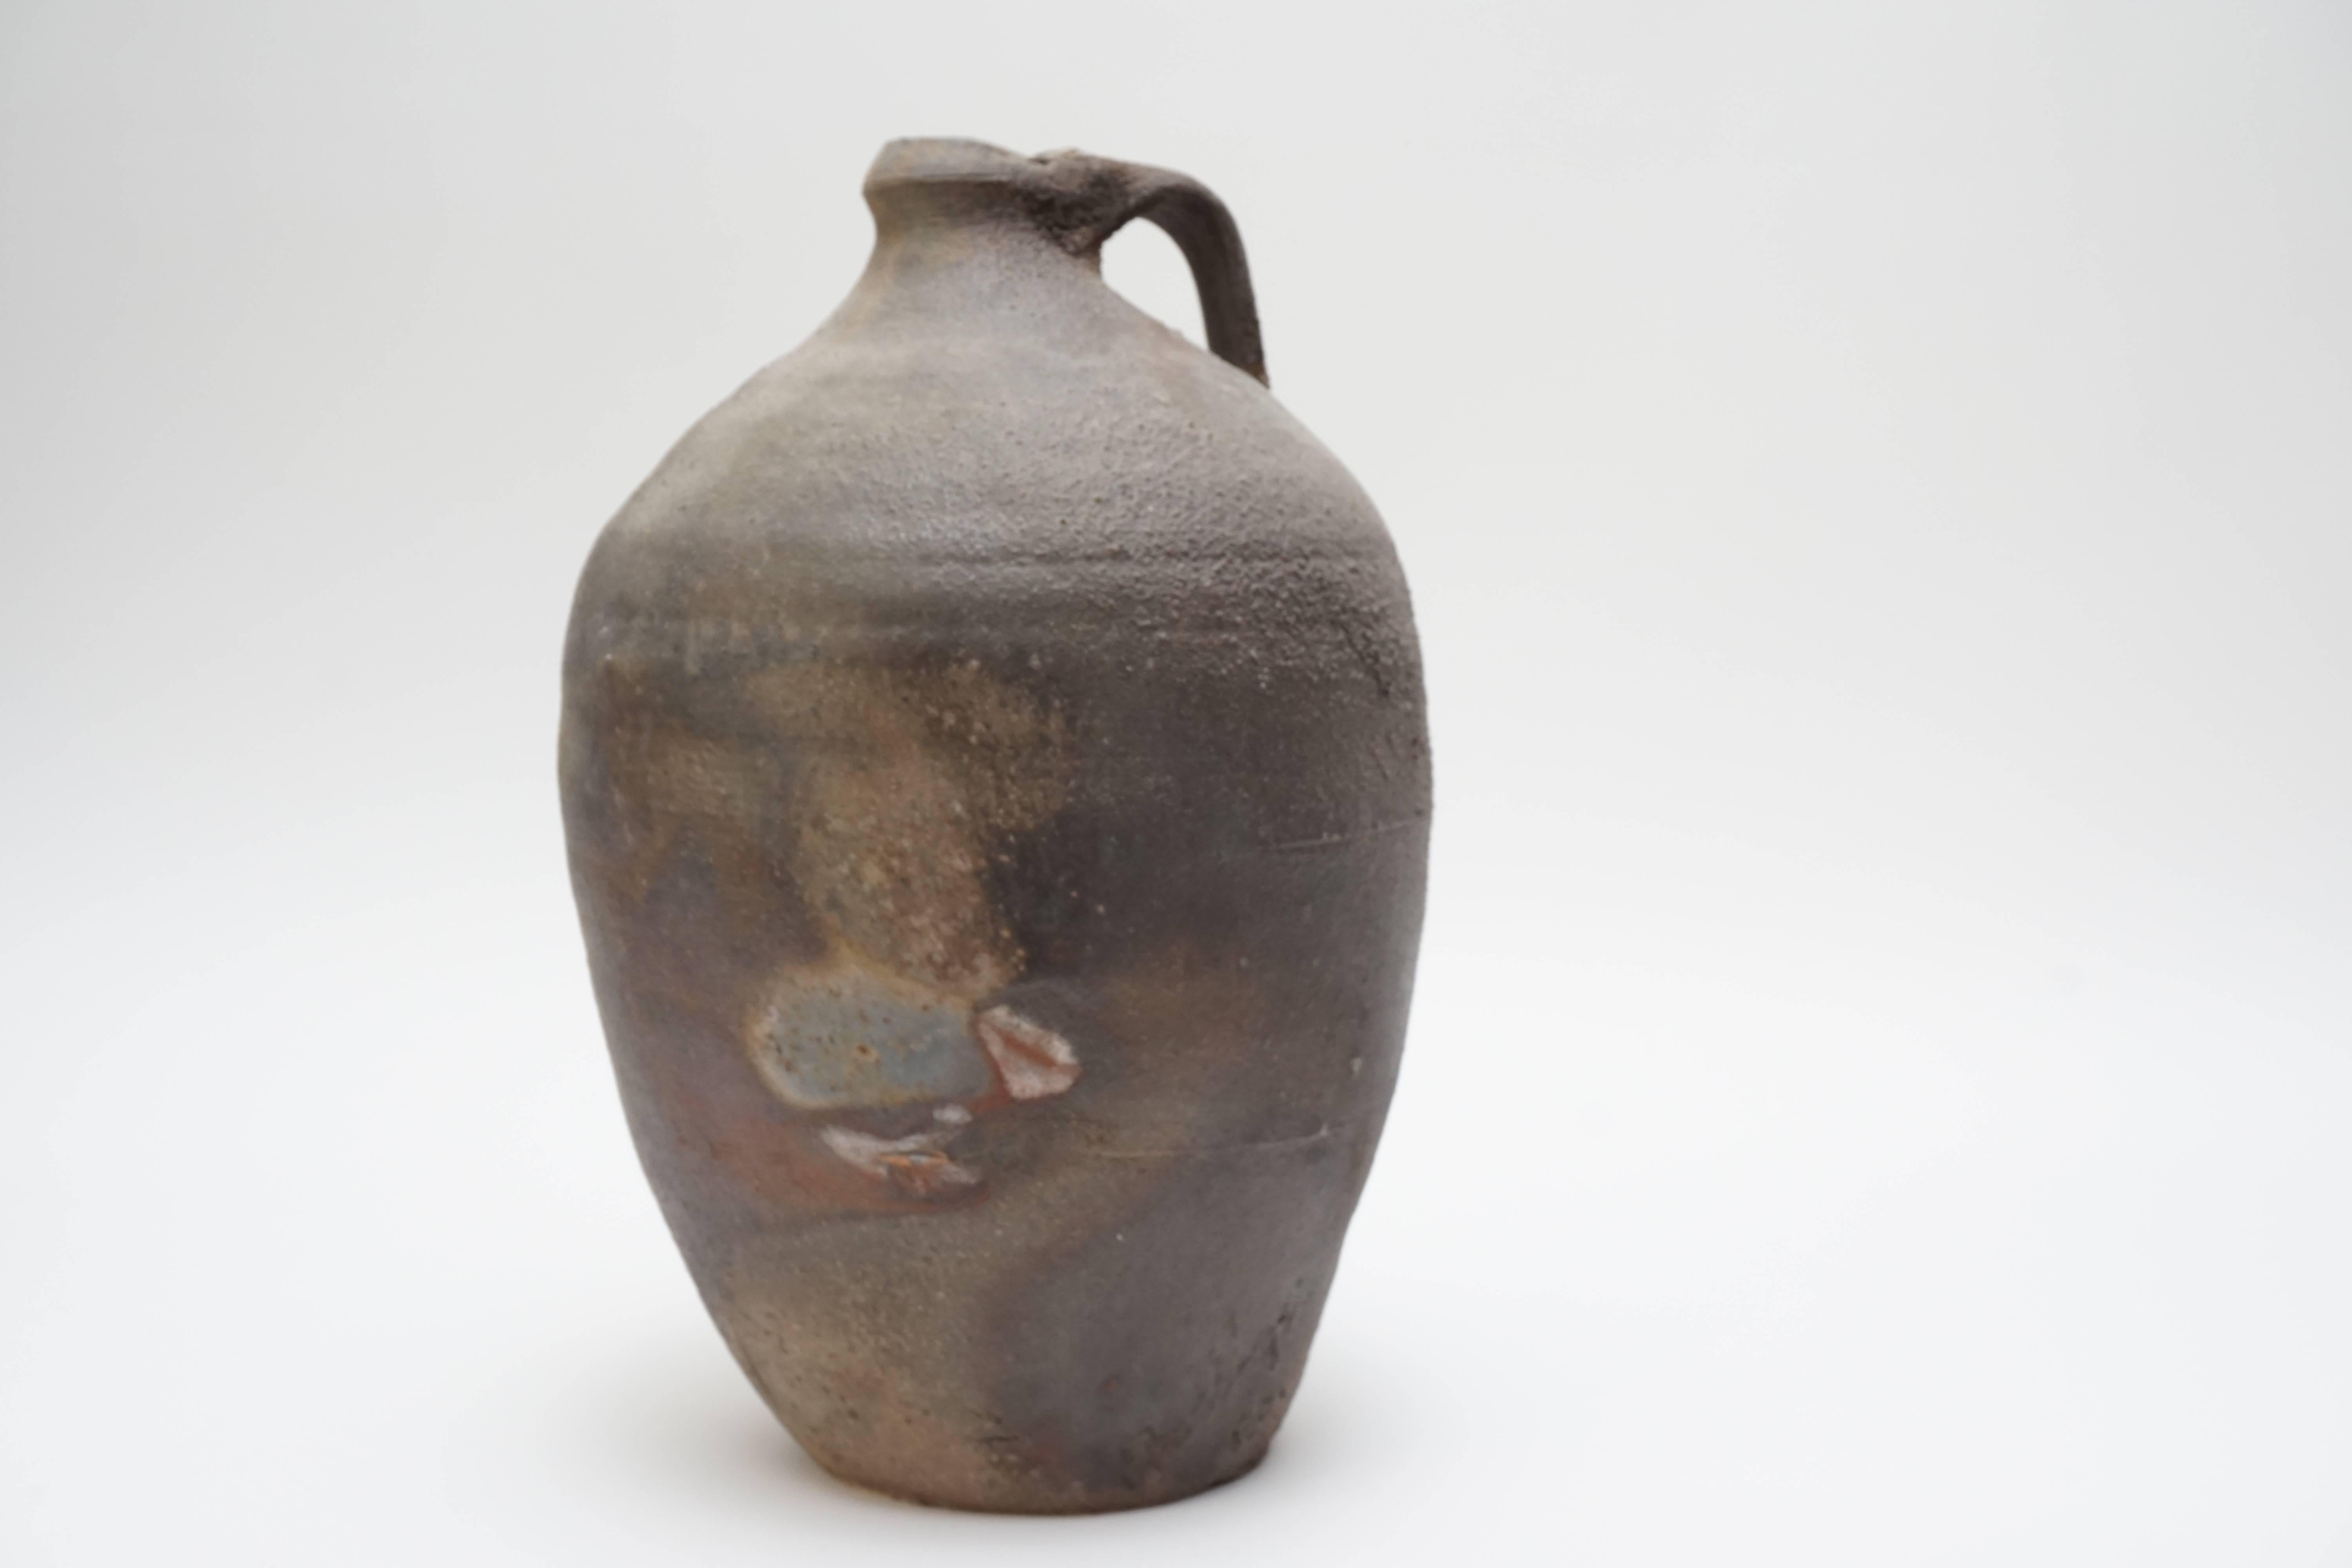 Paul Chaleff ceramic vessel.